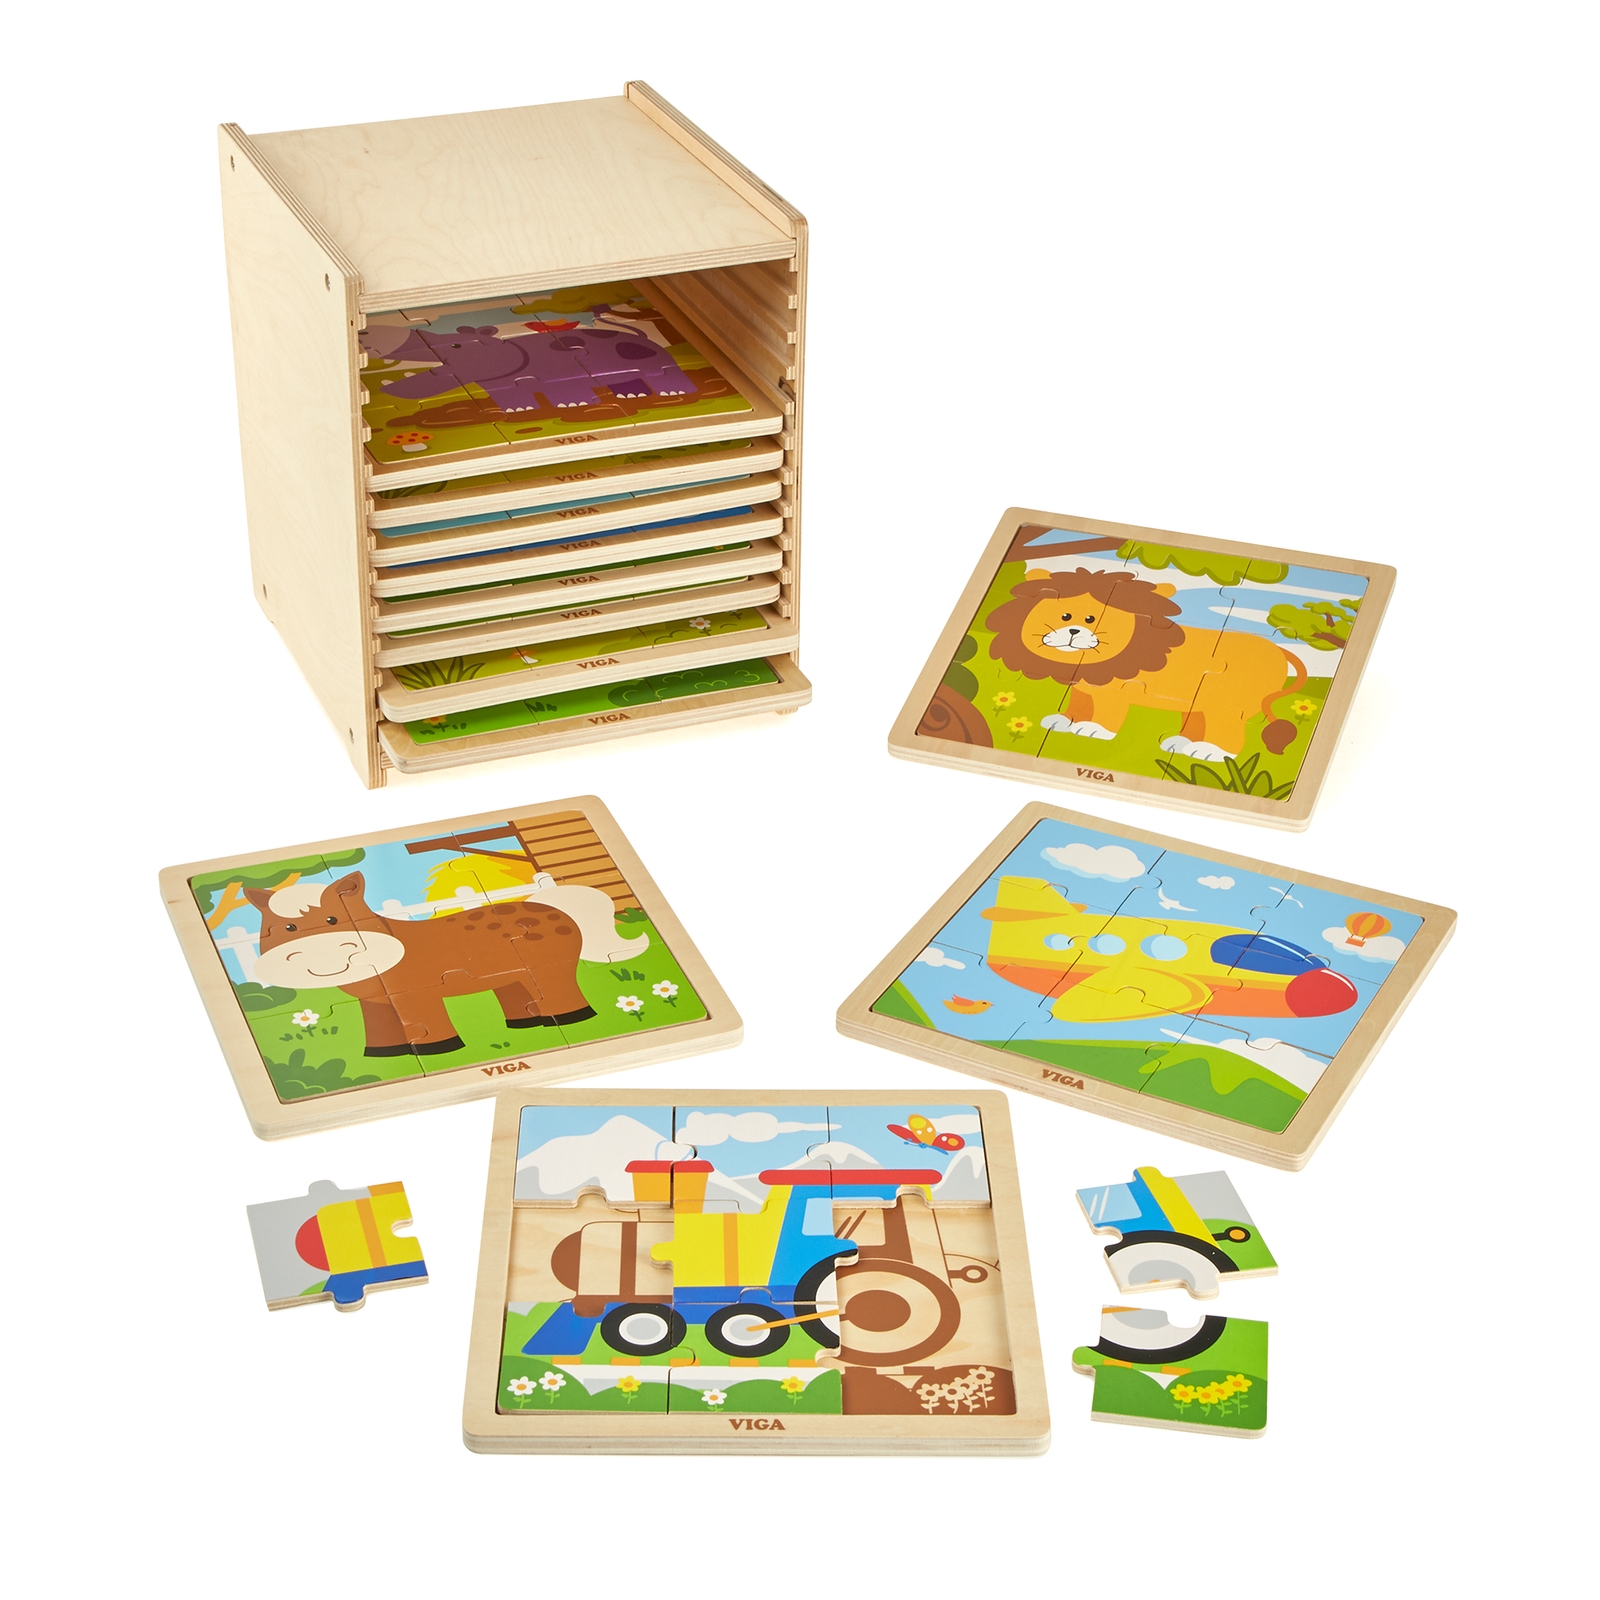 Wooden Jigsaw Set with Storage Box - 9 Piece - Per Set